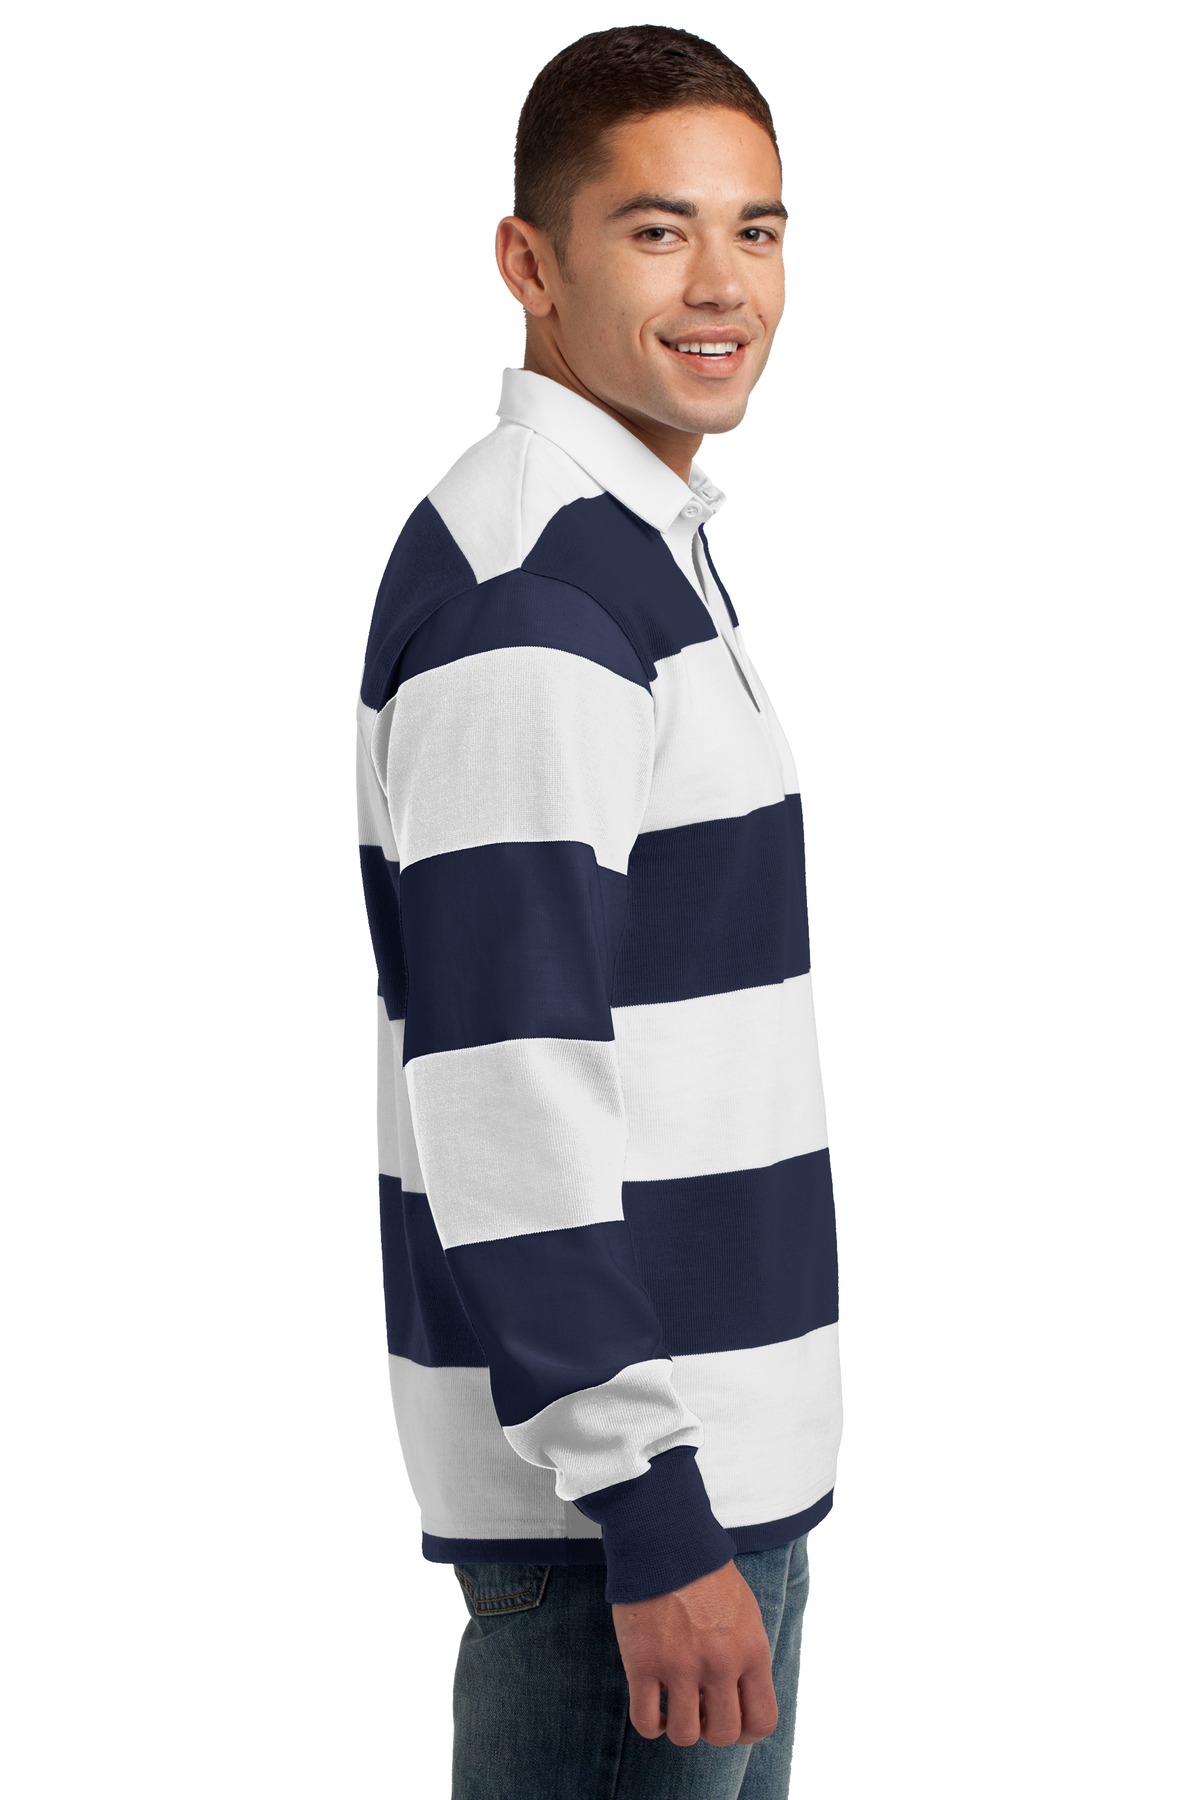 Sport Tek Adult Male Men Stripe Long Sleeves Rugby Polo True Navy/Wht Large - image 3 of 6